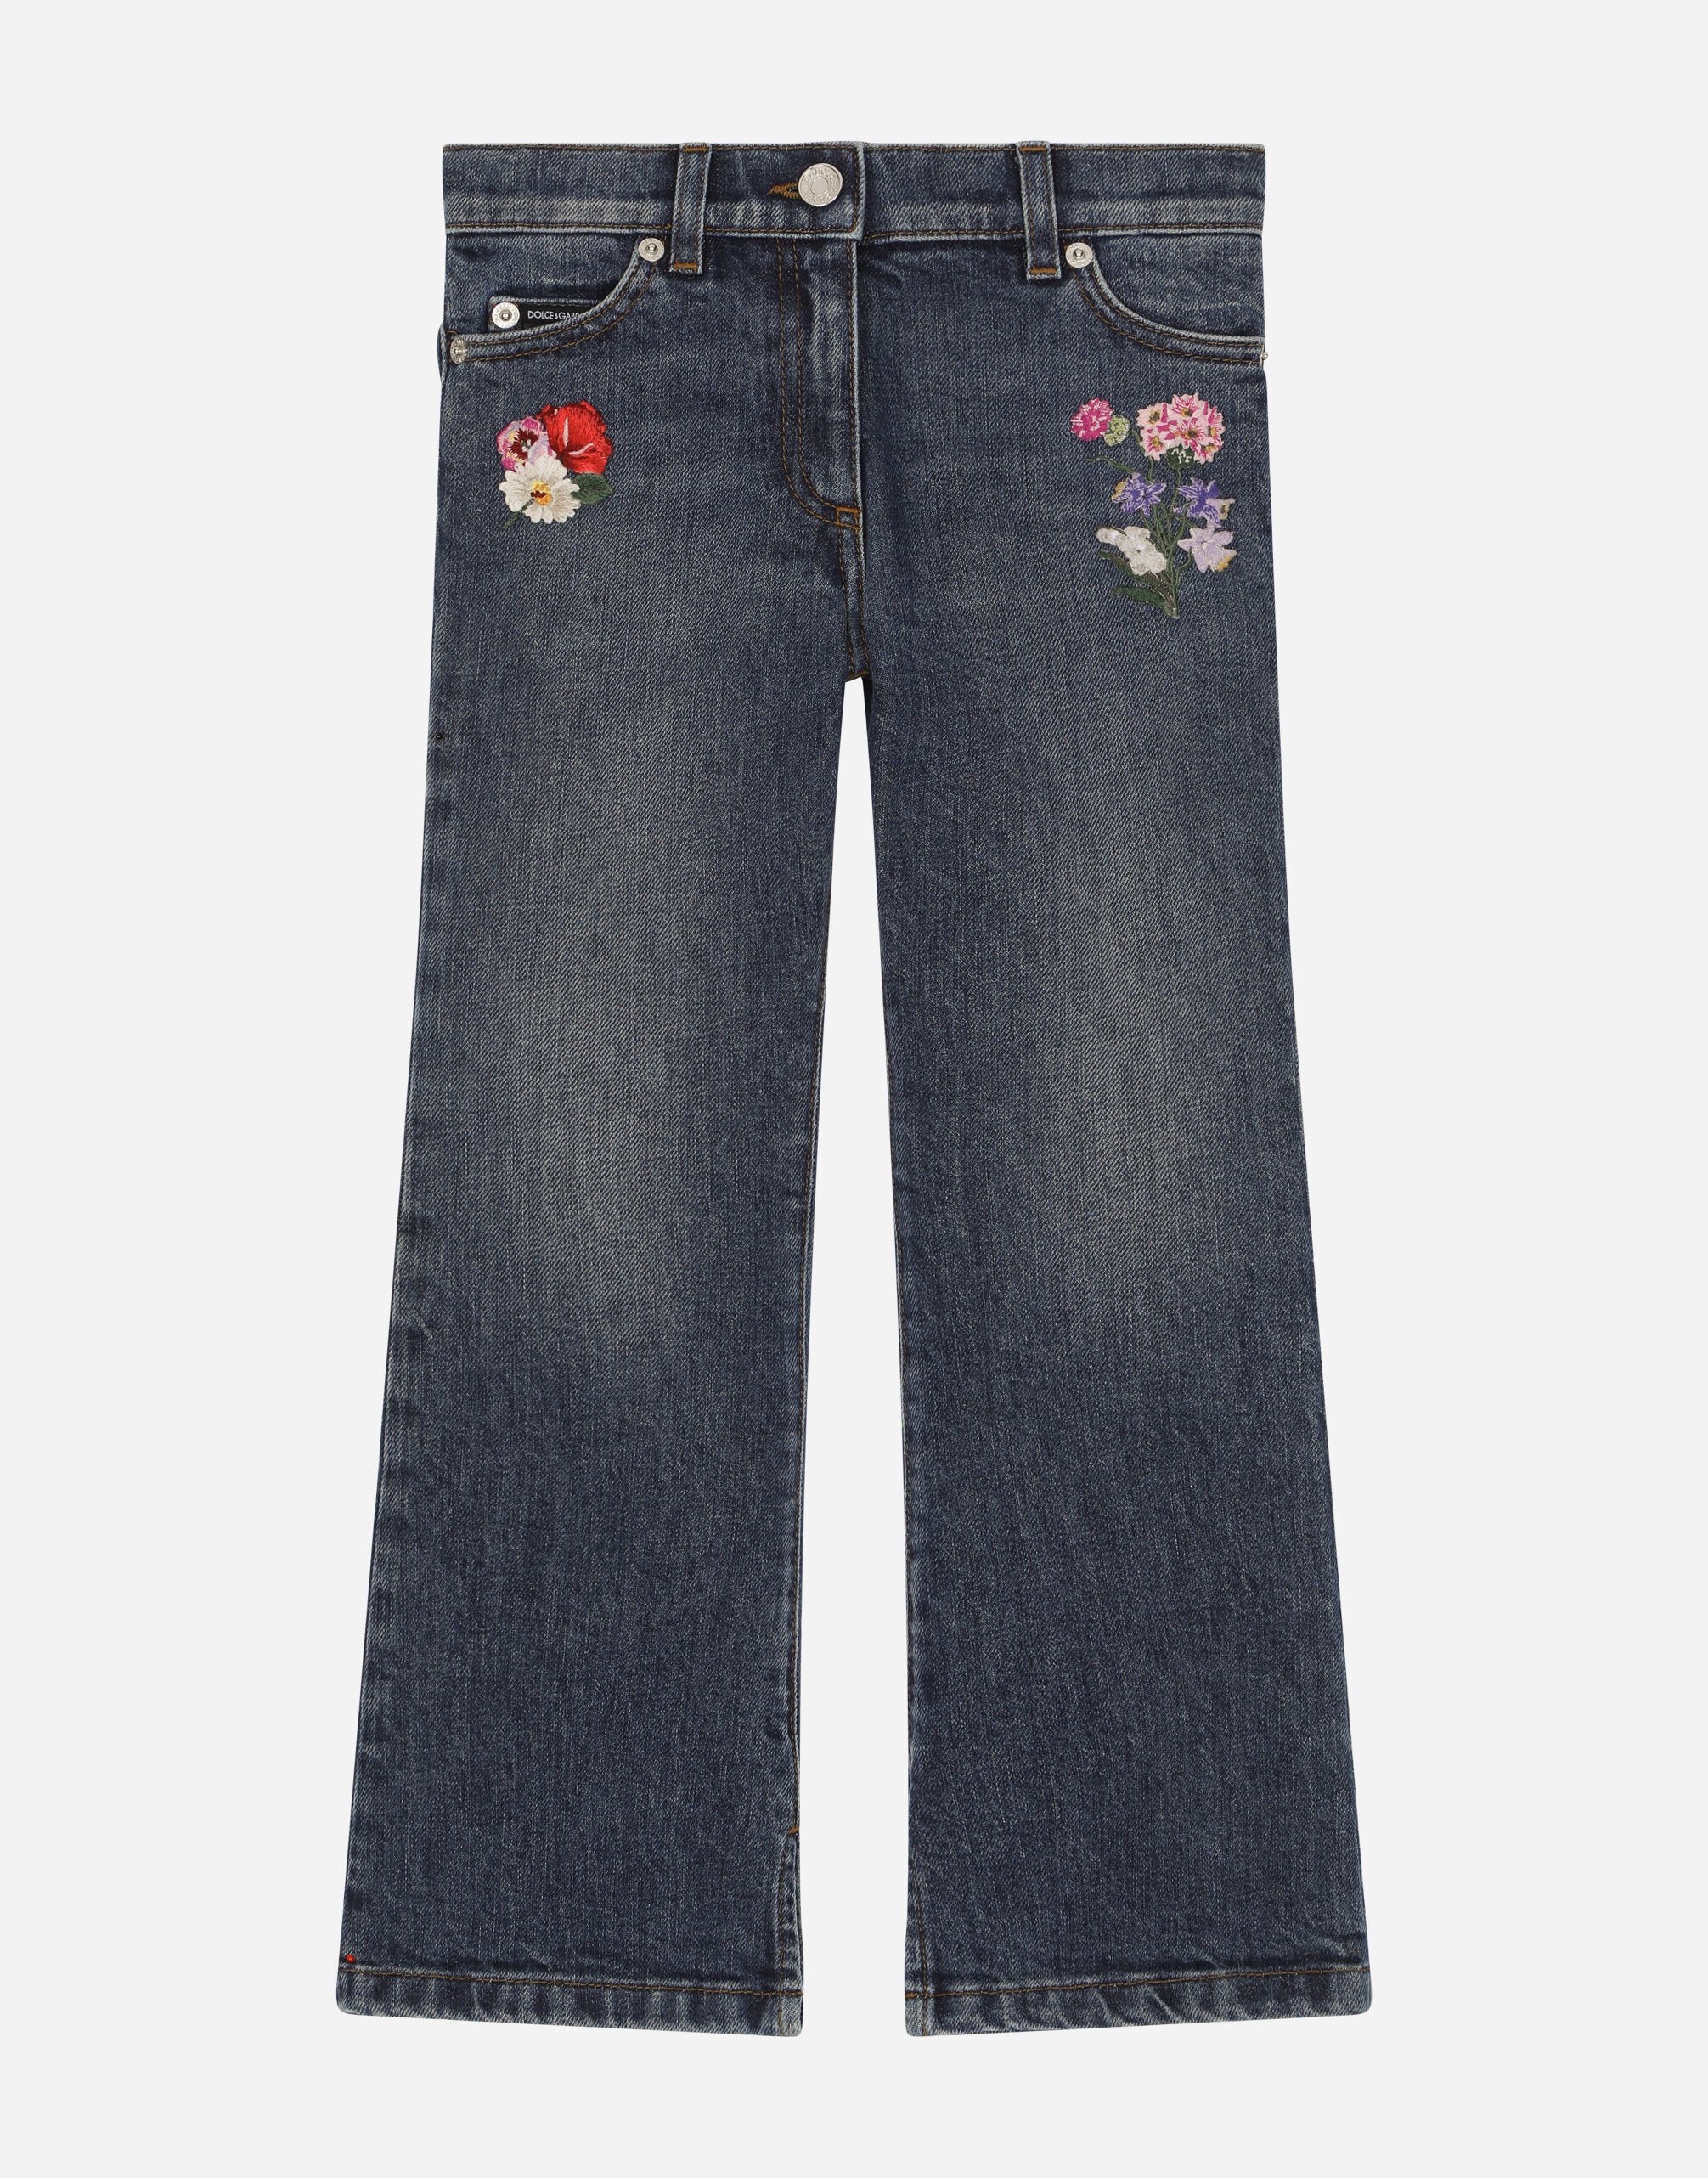 Dolce & Gabbana 5-pocket denim pants with embroidery Print LB3L54G7K4O